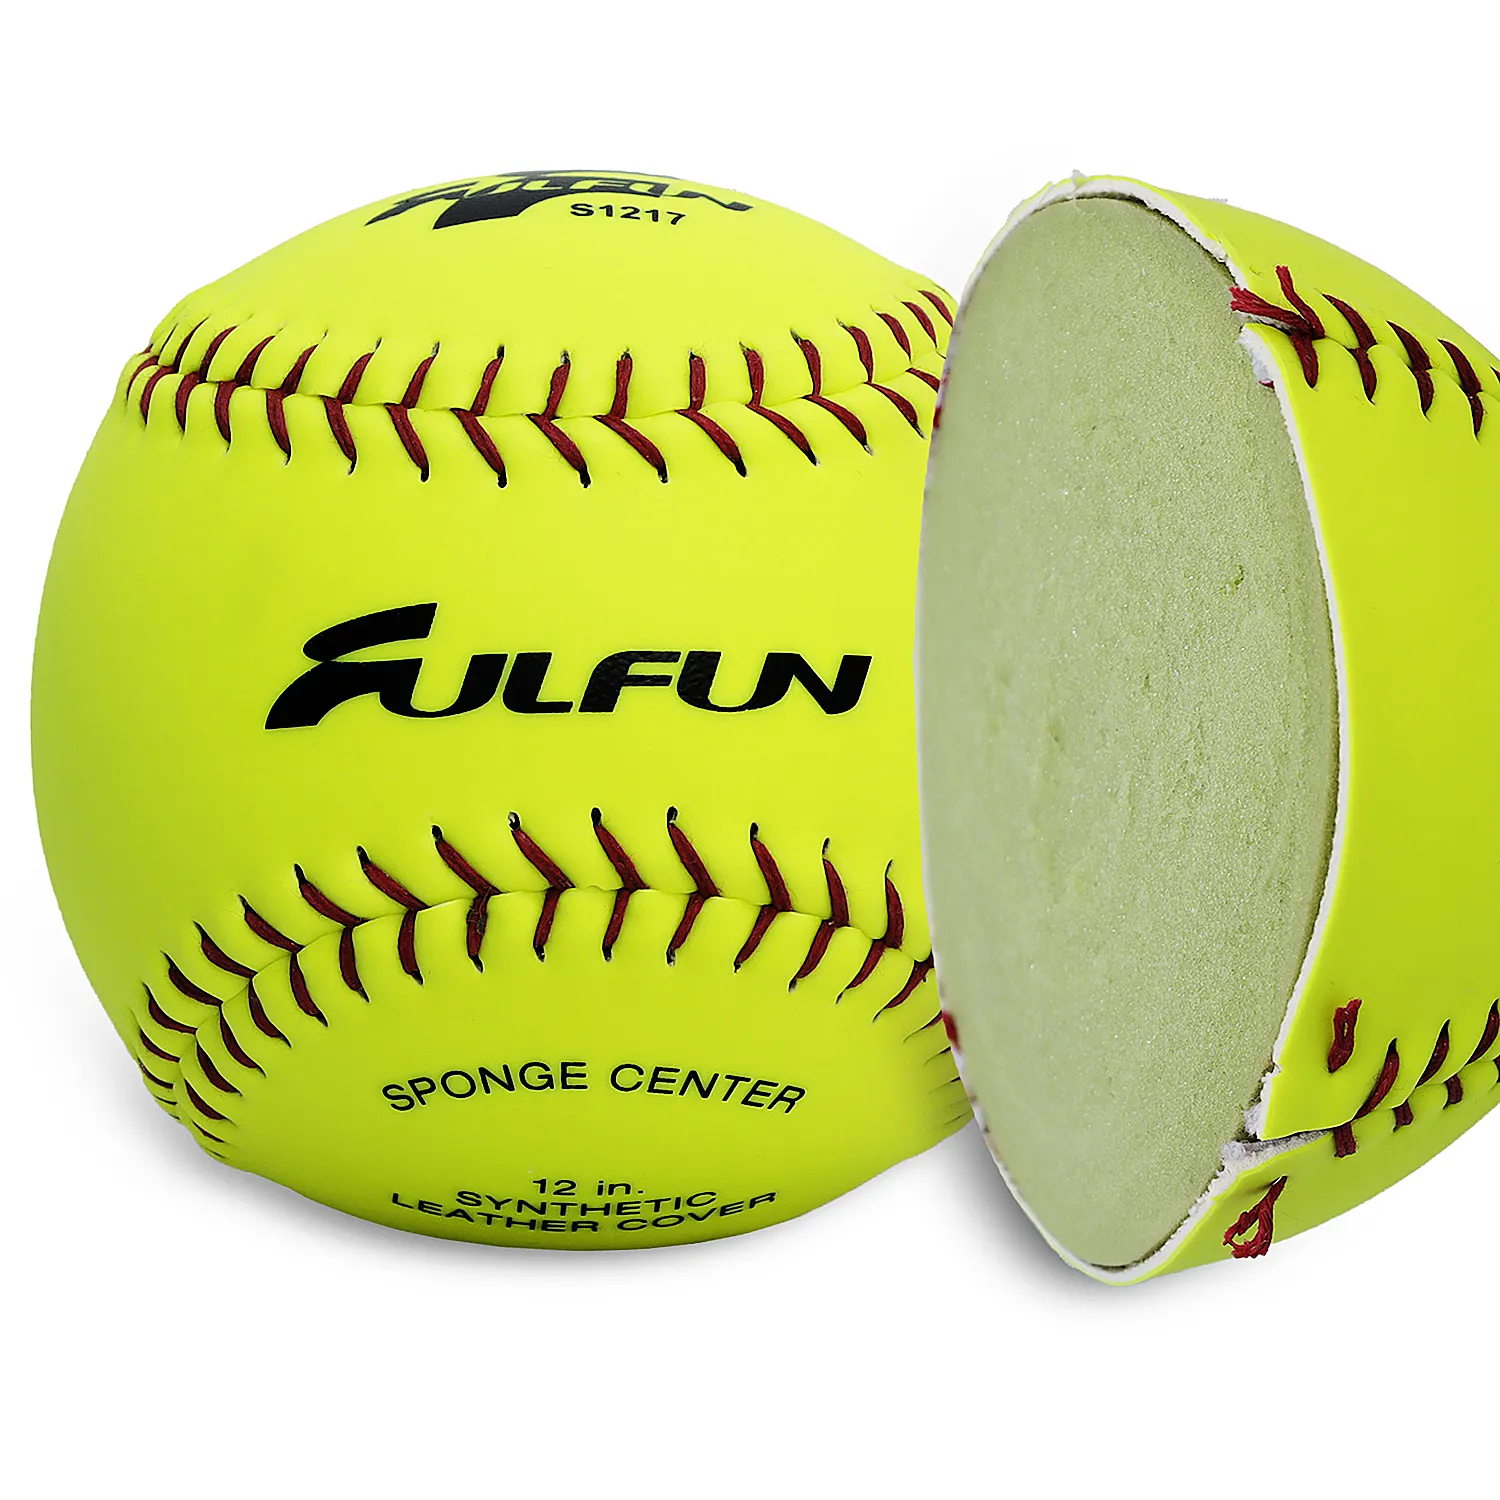 Training Practice Plastic Baseballs 12-Pack Hollow Airflow Softballs for Indoor or Outdoor Sports Equipment for Hitting Training & Team Balls 